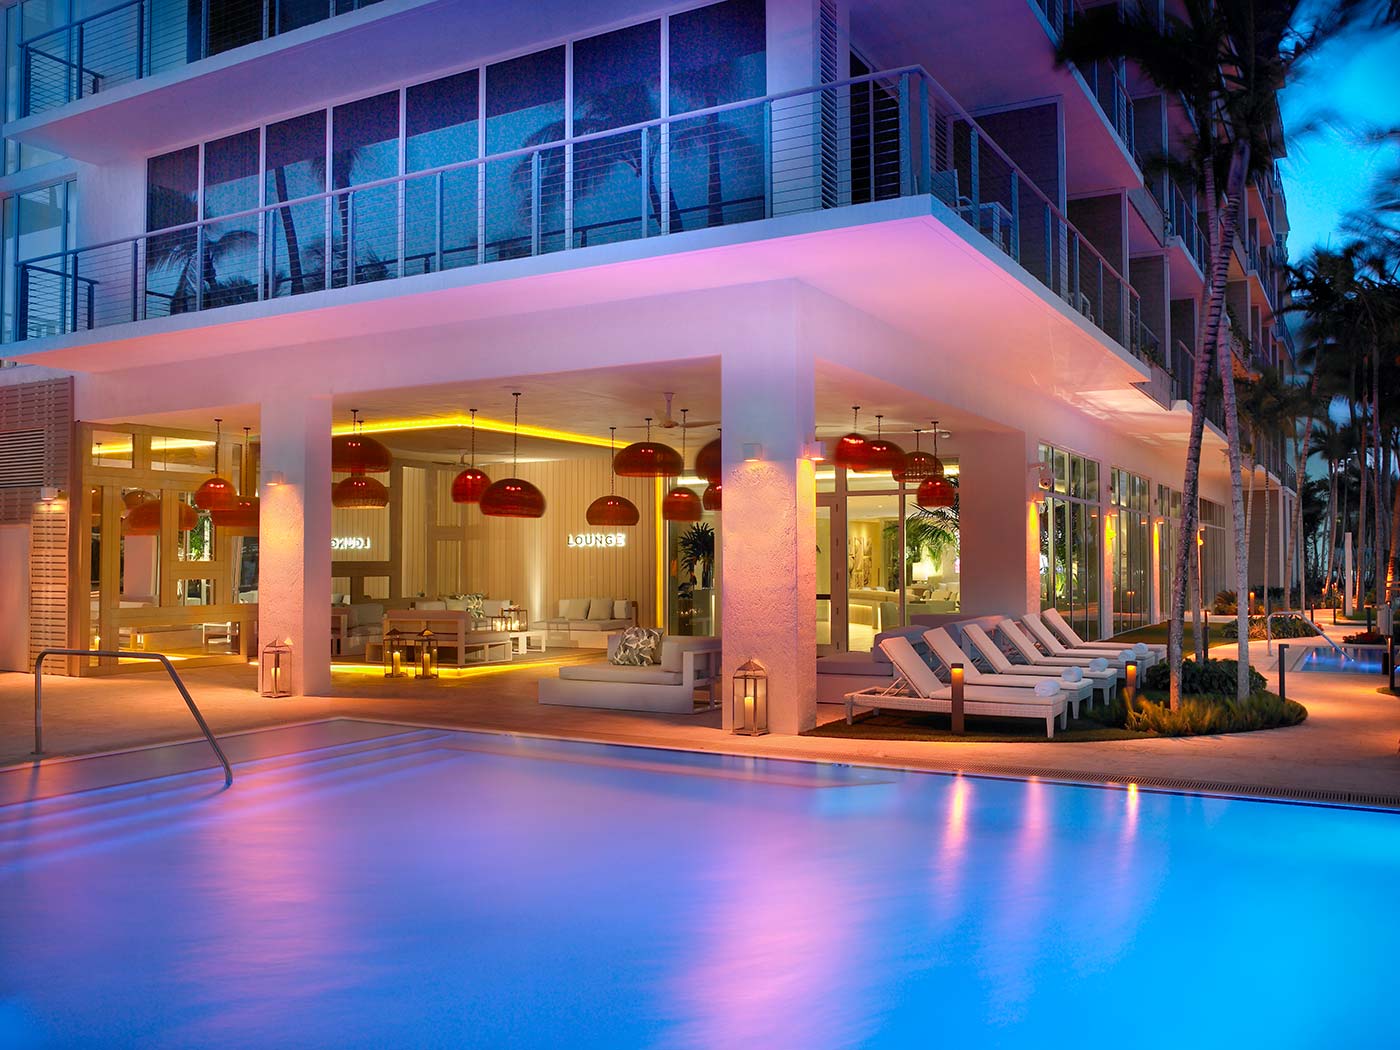 Grand Beach Hotel Bay Harbor, Miami | Hotel Image Gallery